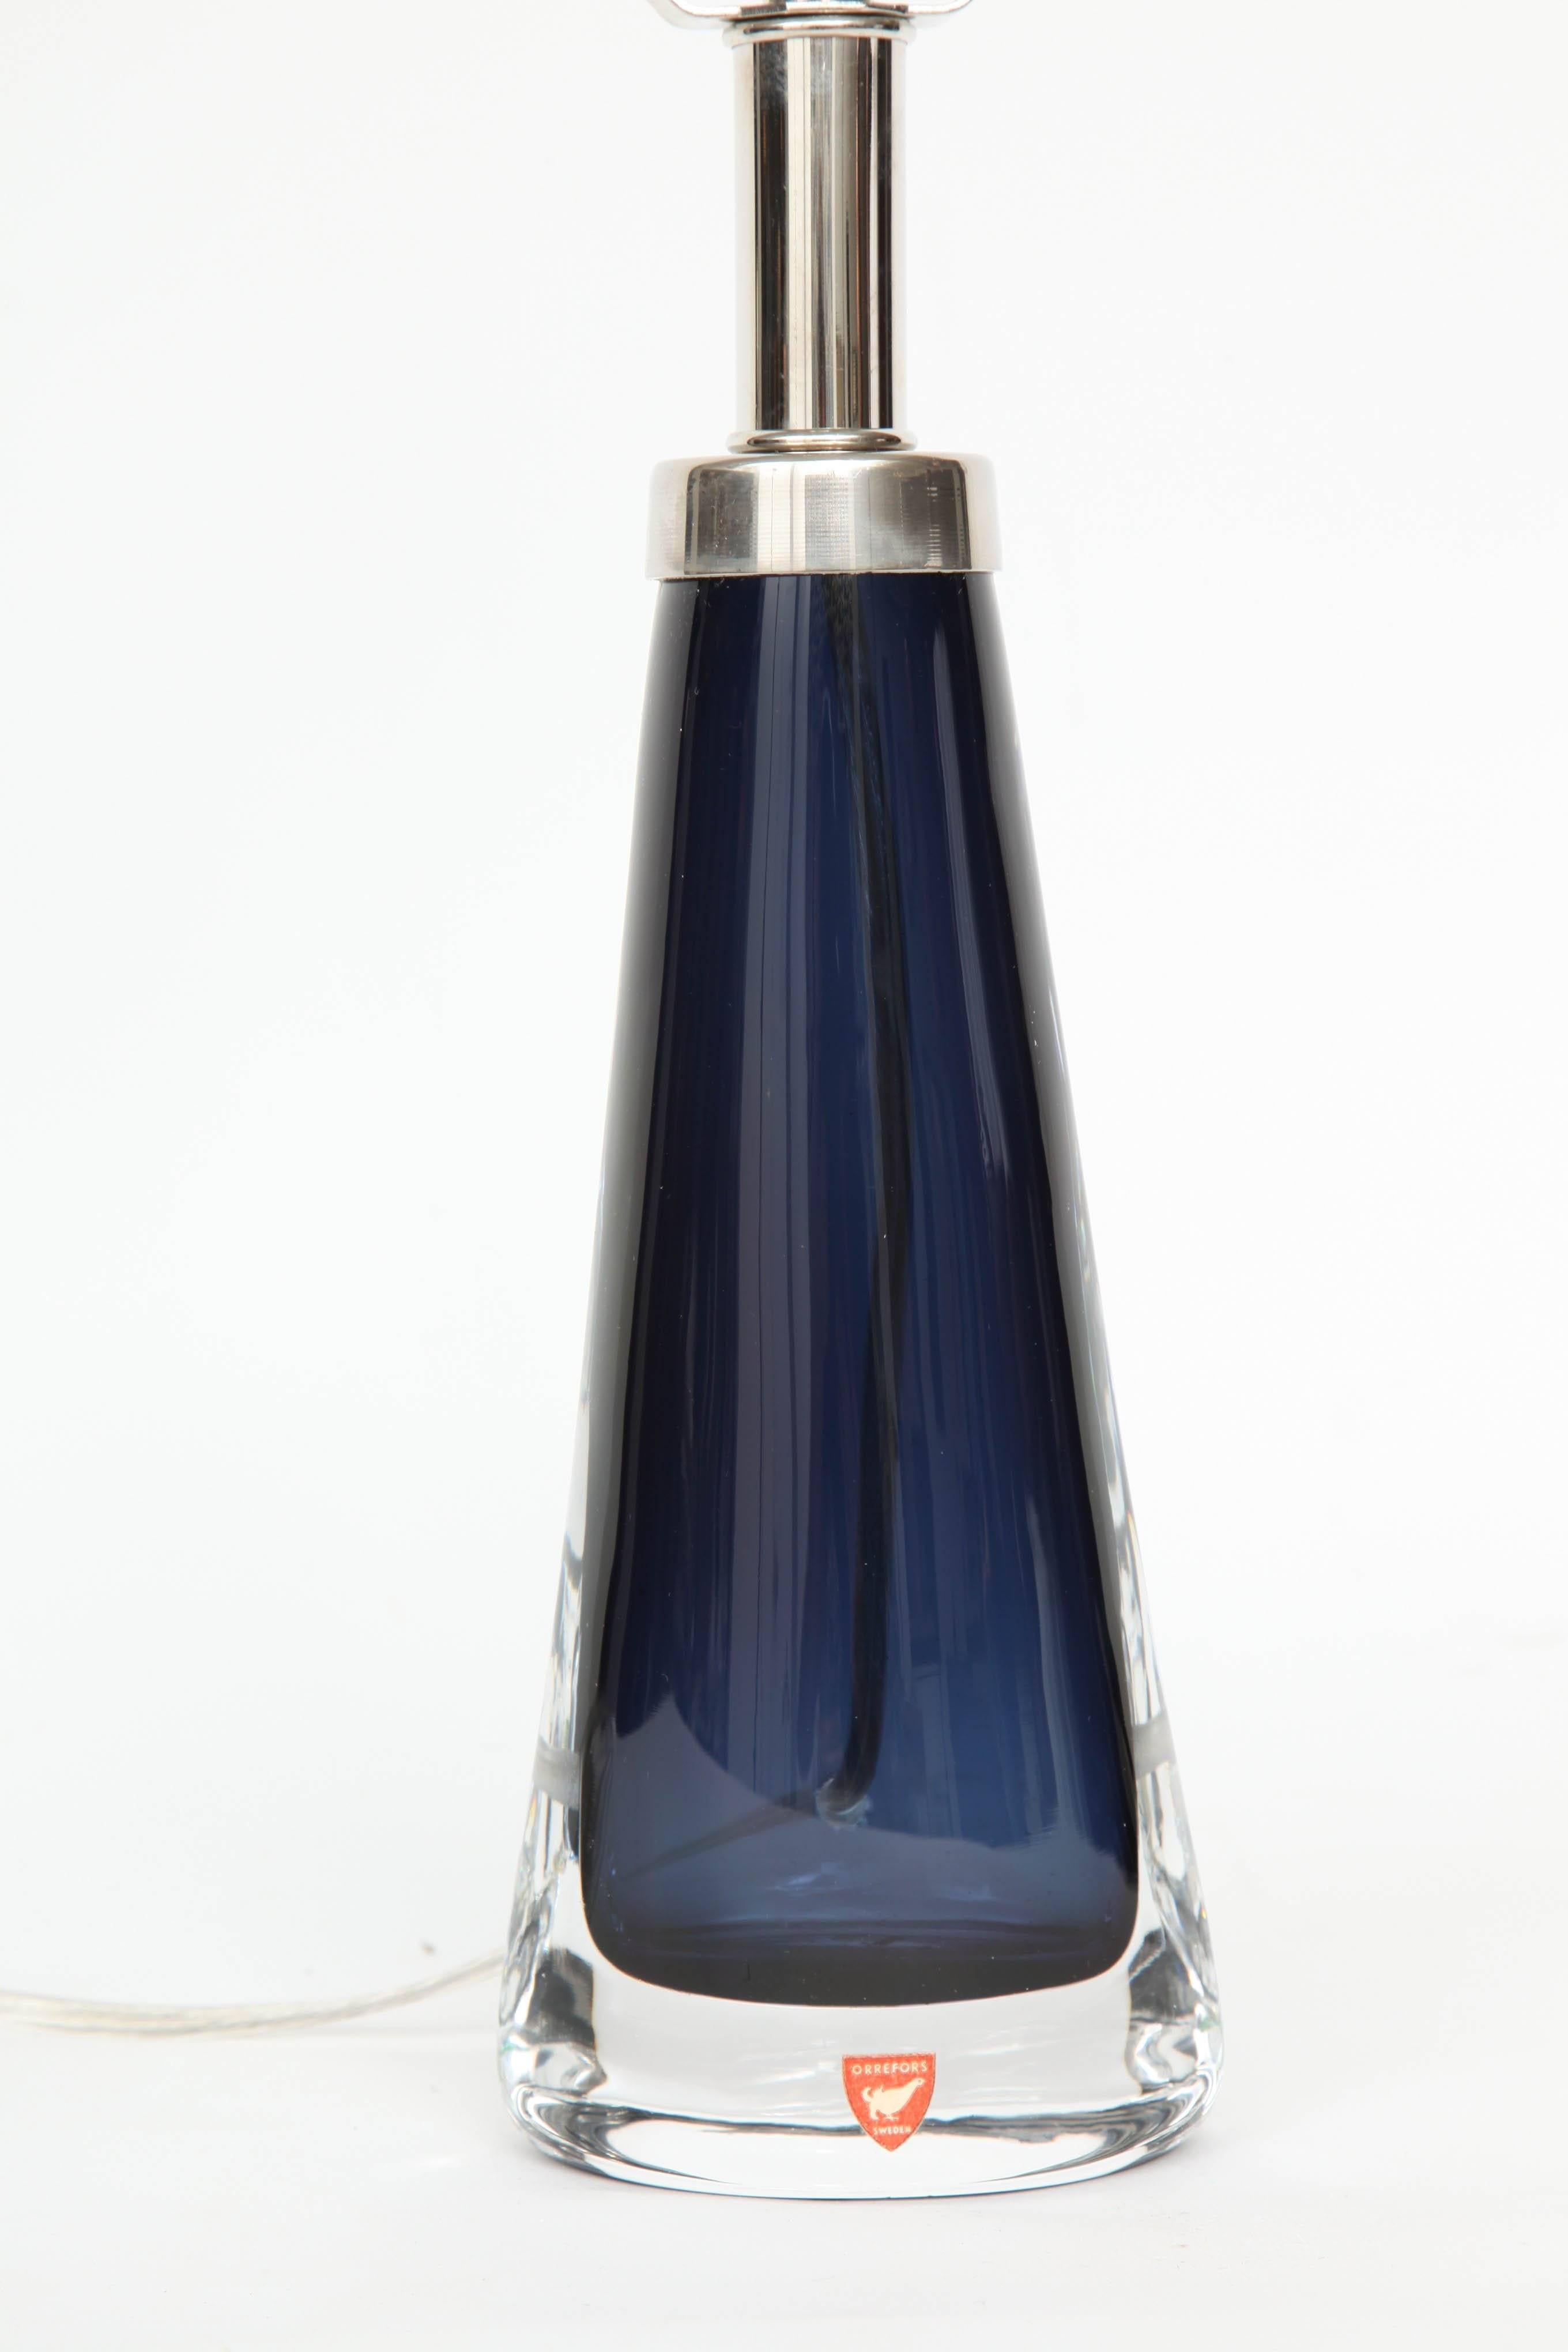 Crystal Nils Landberg/Orrefors Dark Sapphire Blue Lamps